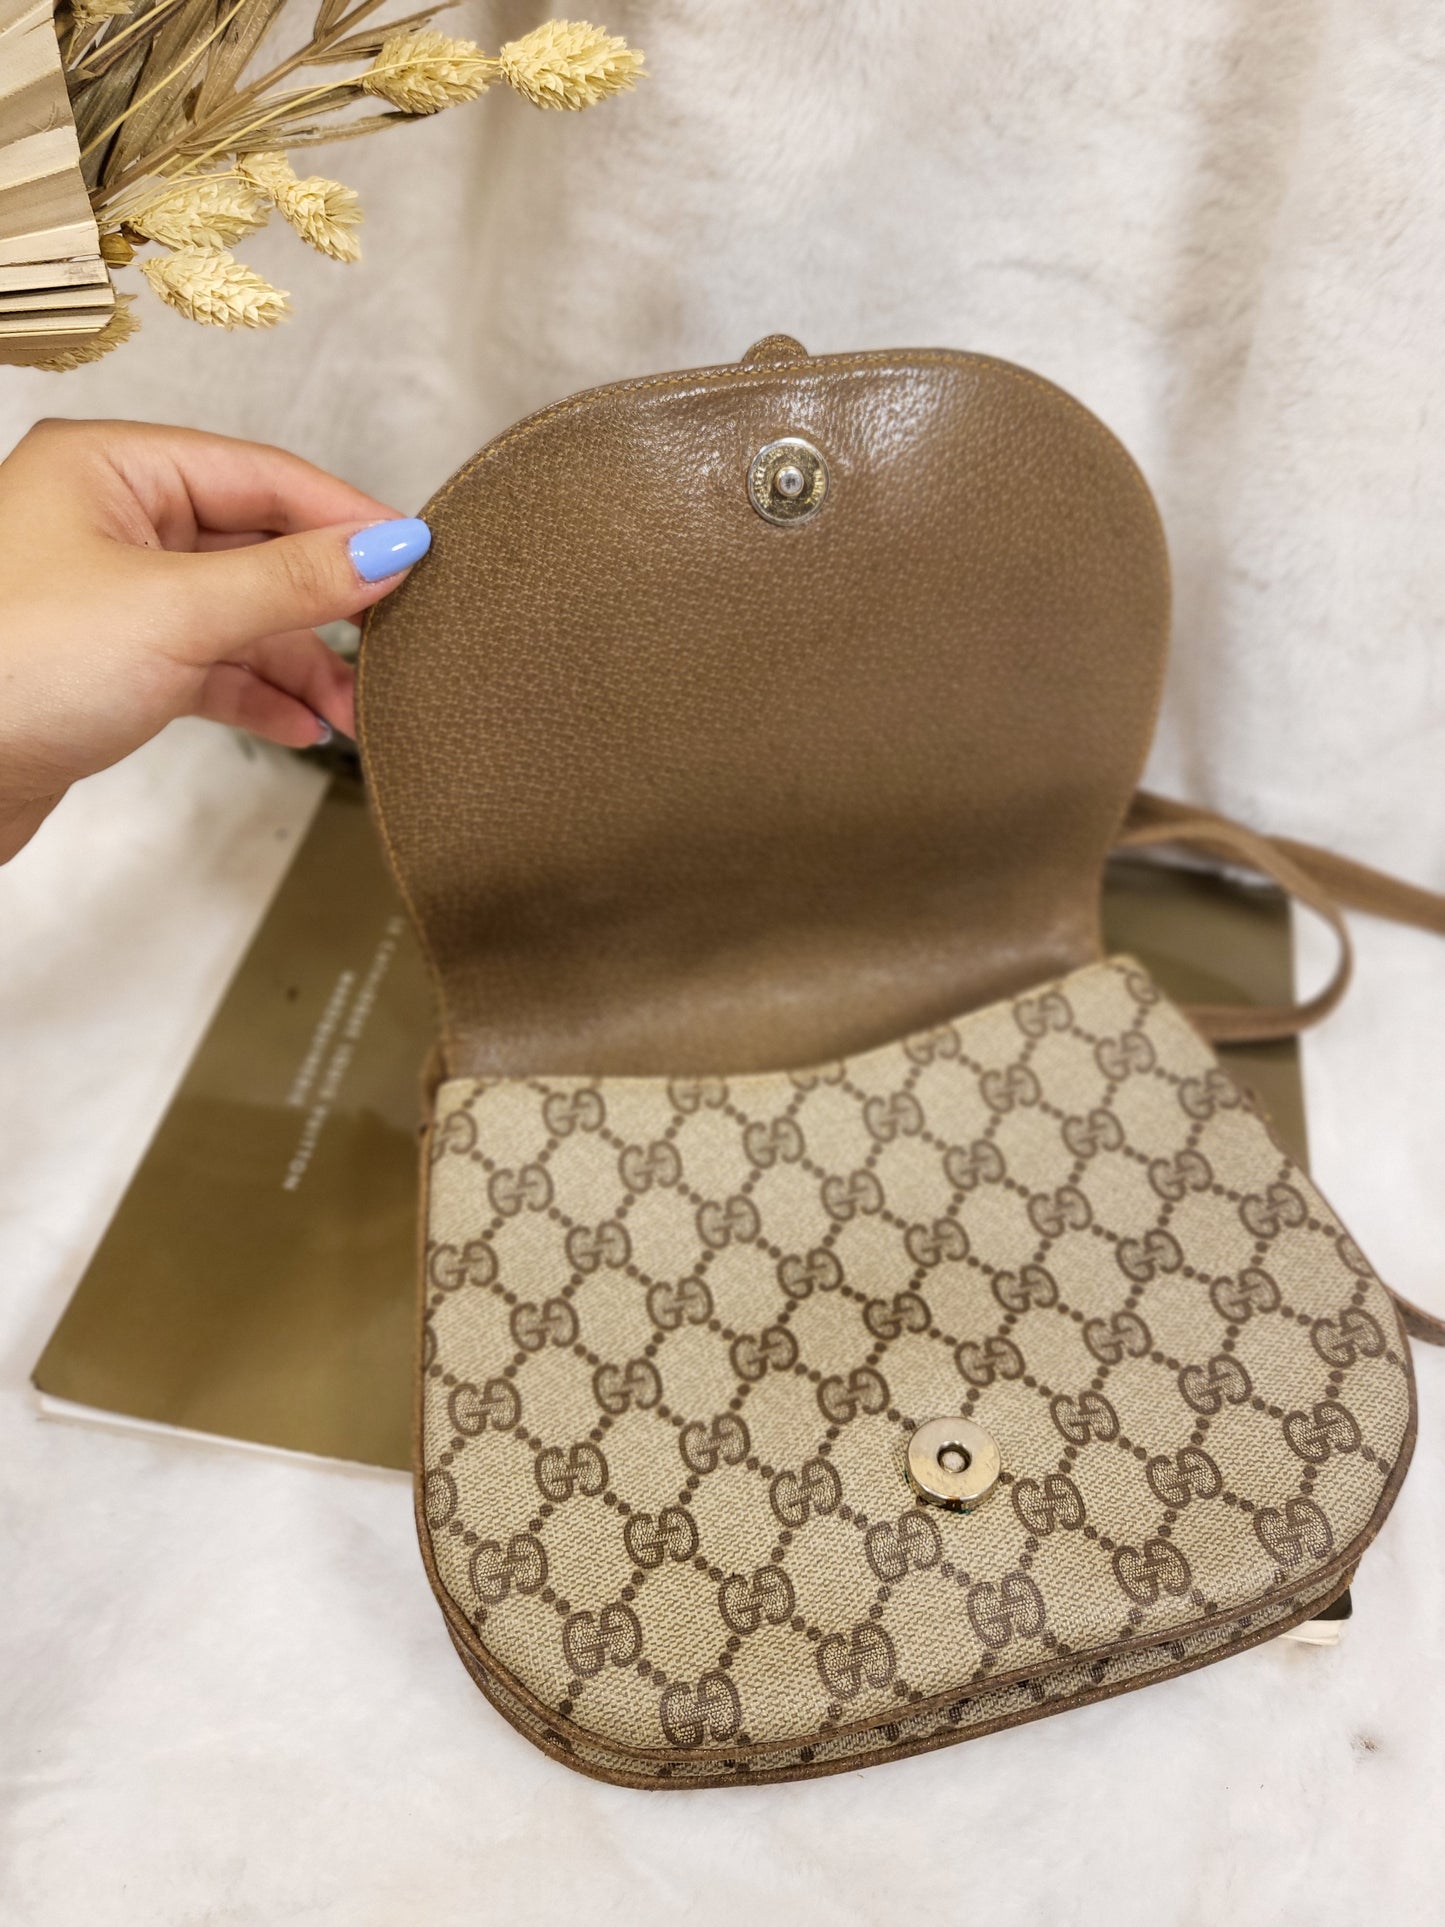 Authentic pre-owned vintage Gucci crossbody shoulder bag